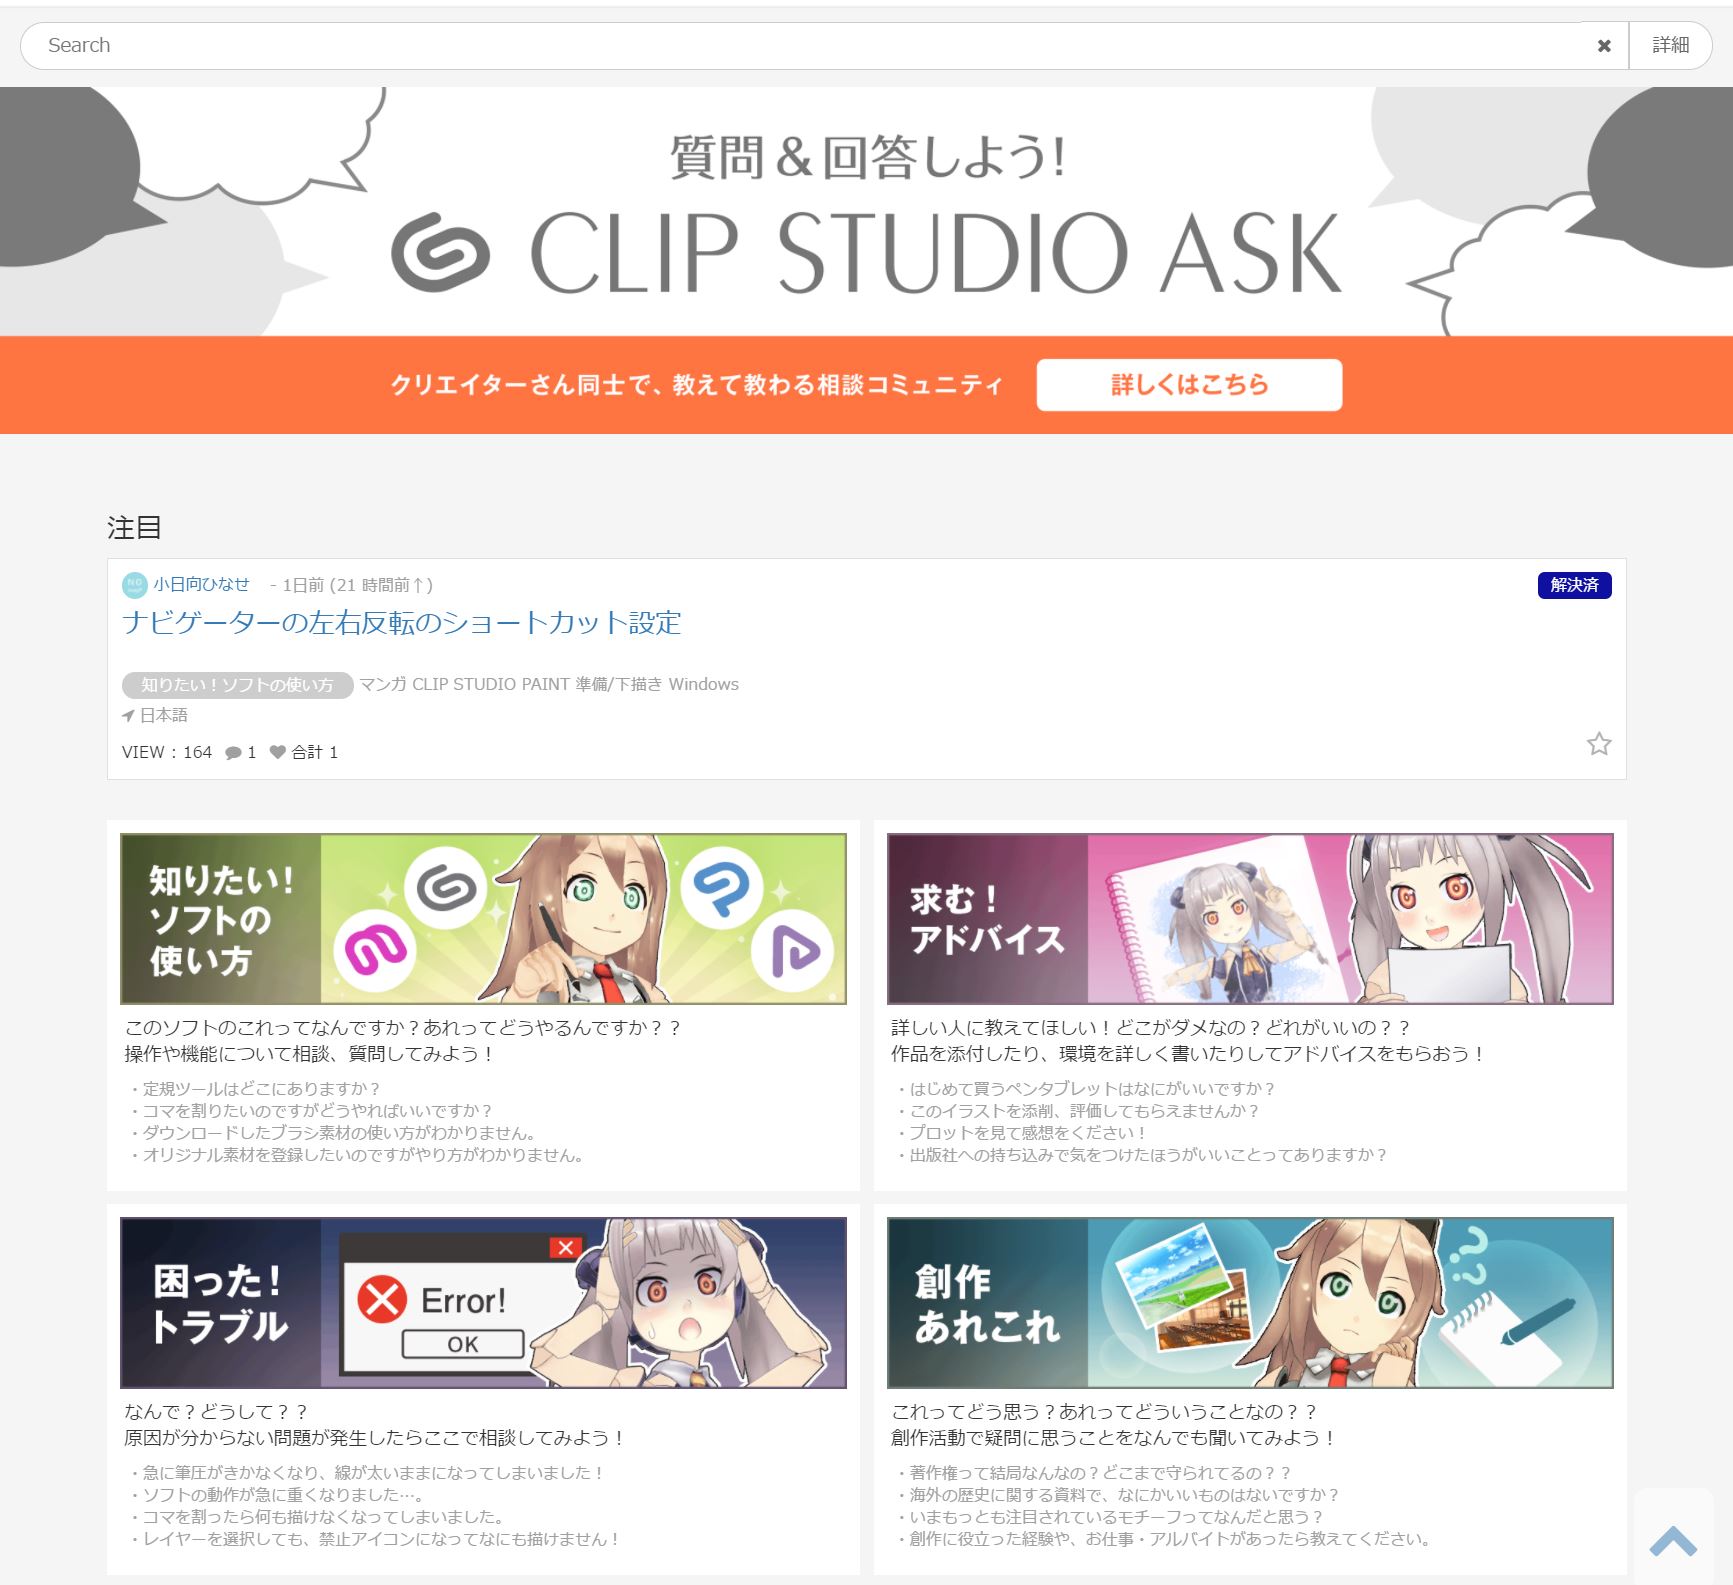 CLIP STUDIO ASK画面